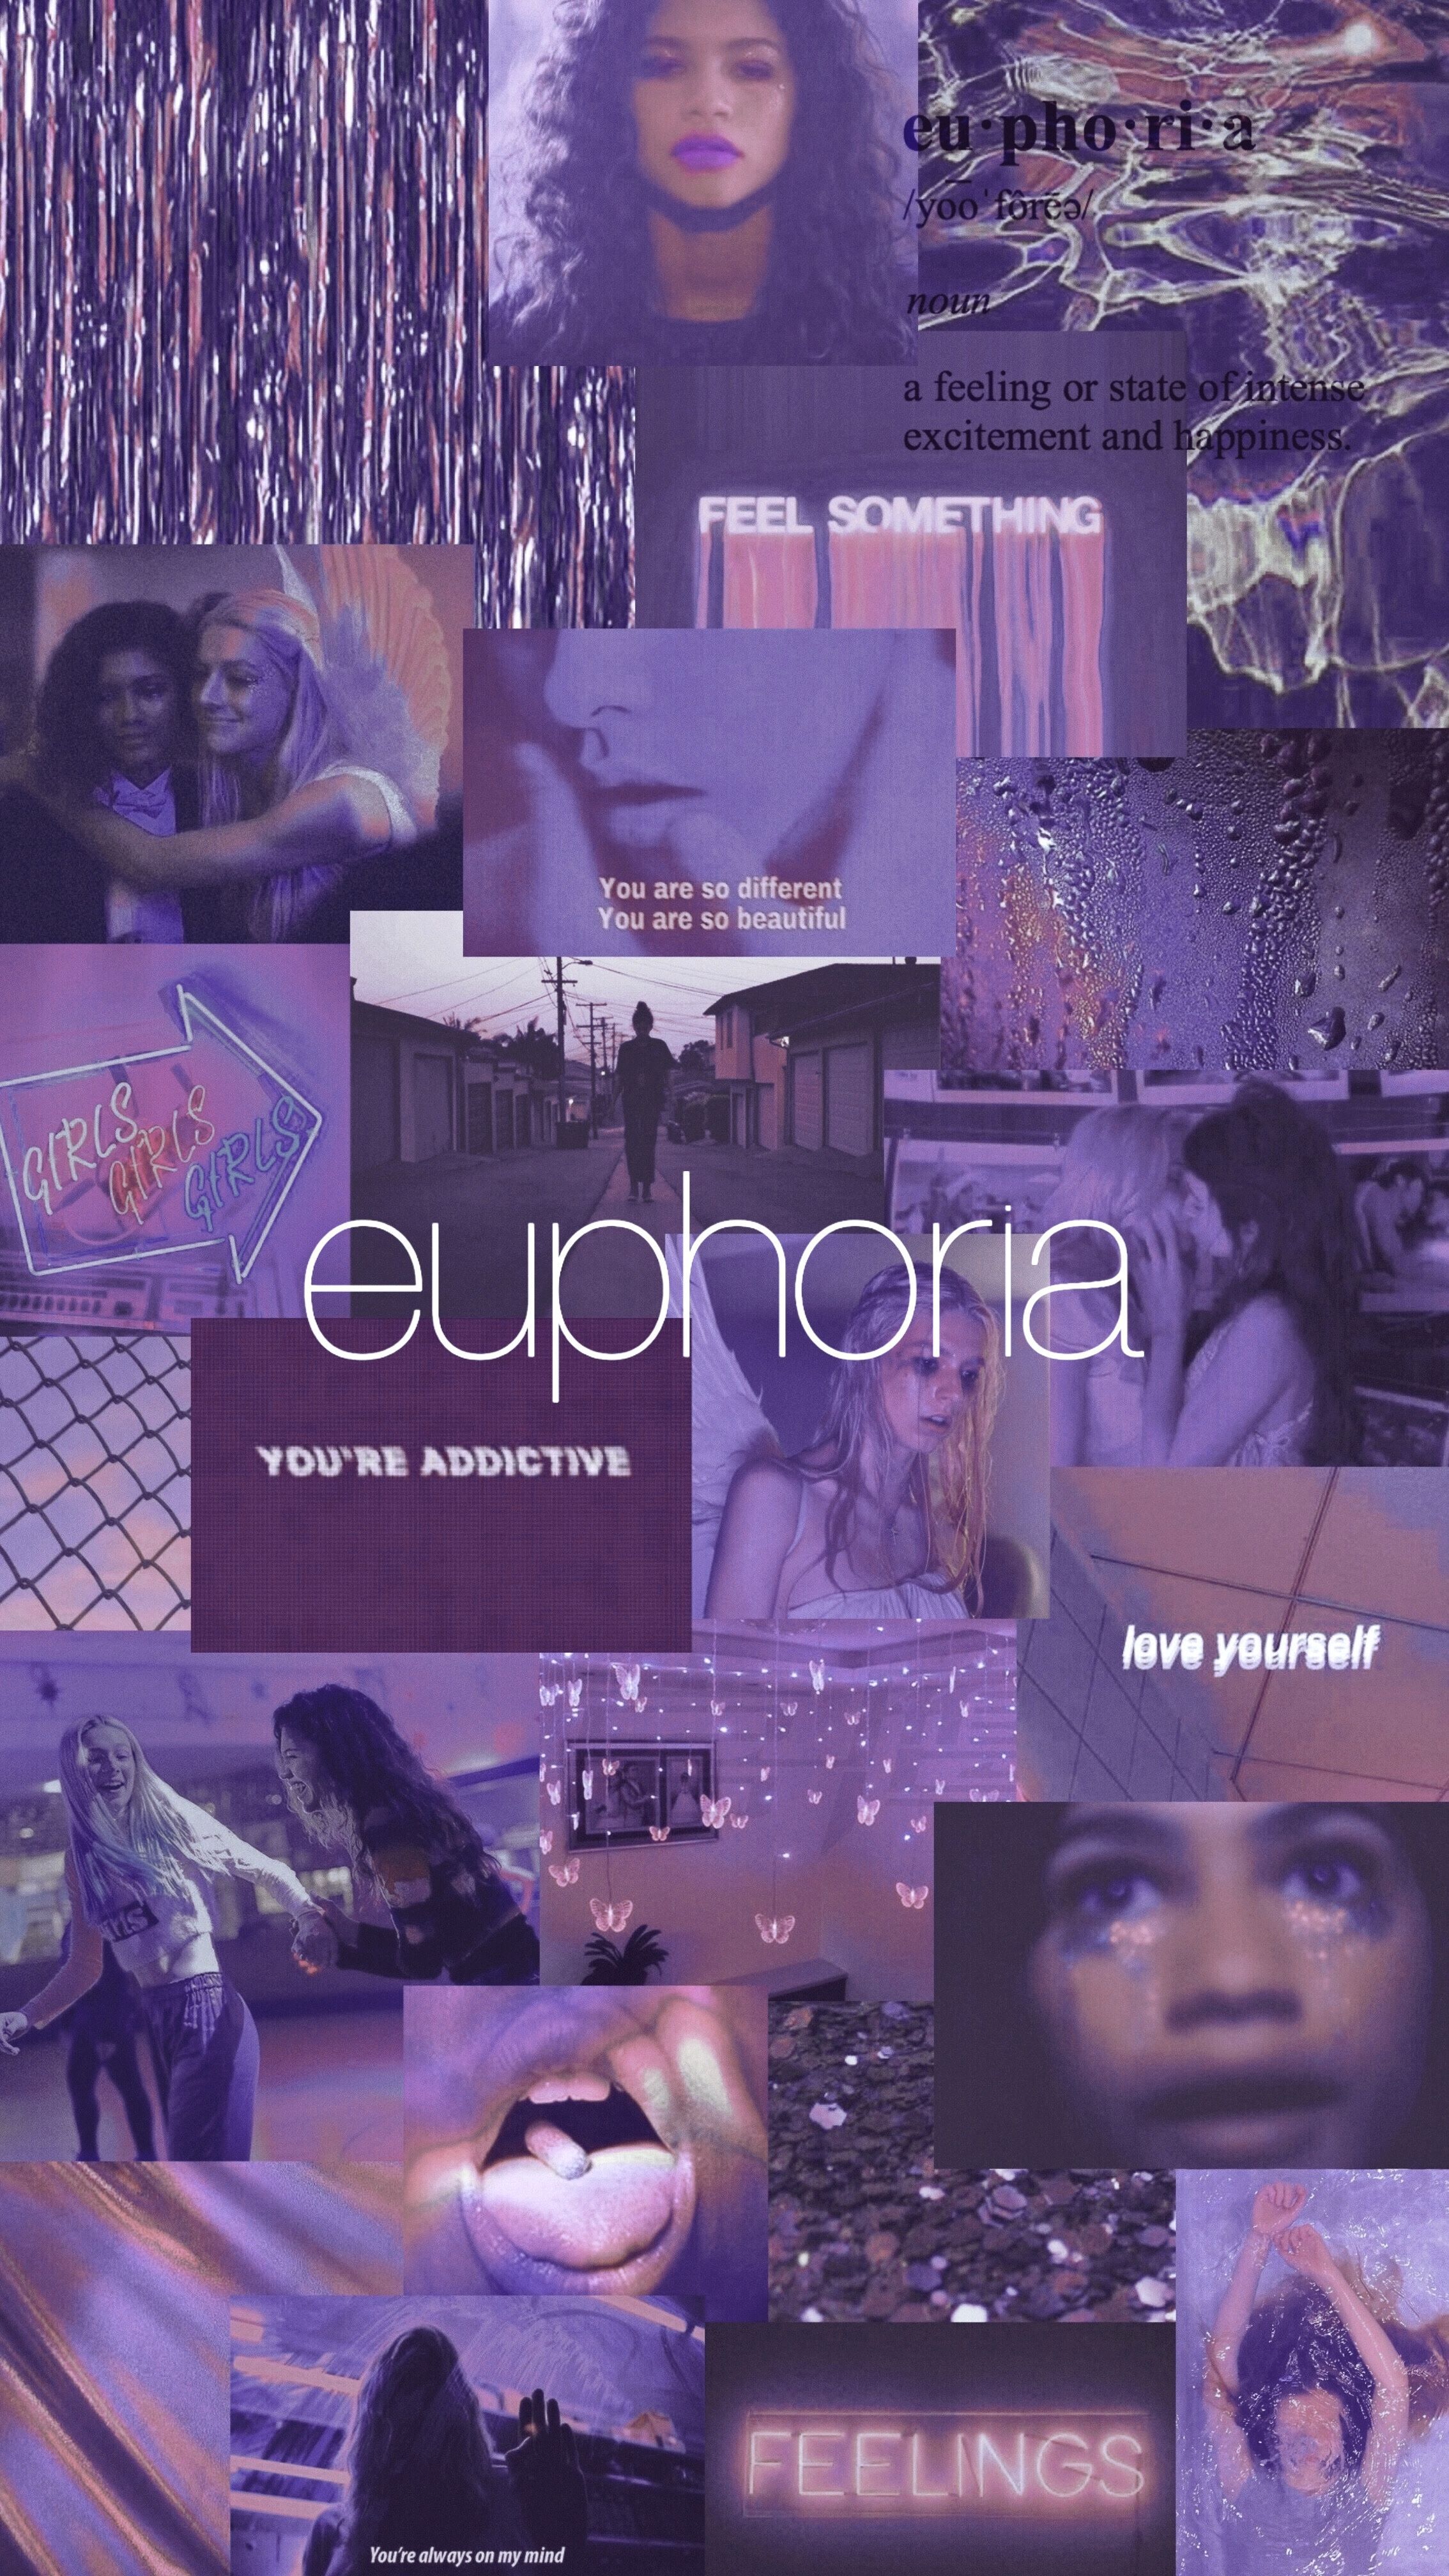 Euphoria Wallpaper